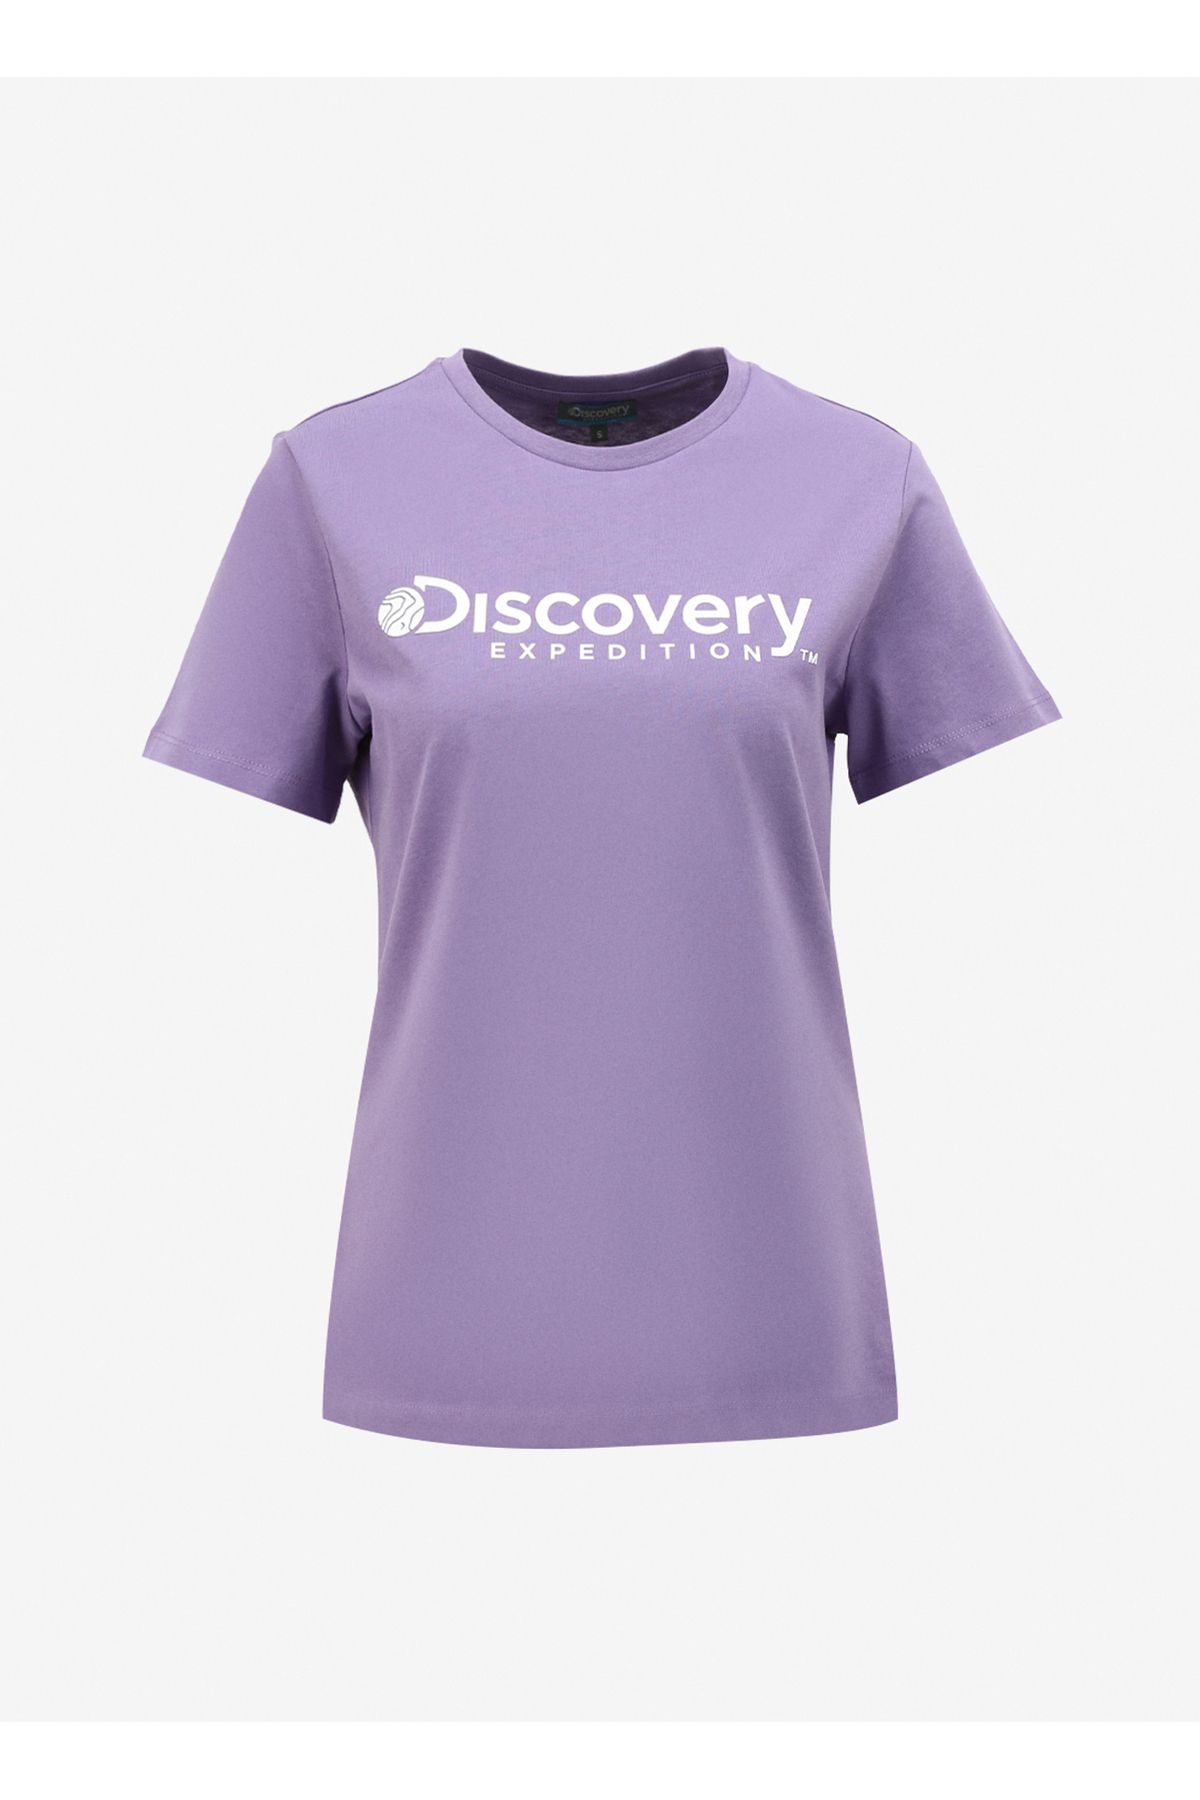 Discovery Expedition Lila Kadın Bisiklet Yaka T-shirt D4sl-tst3053